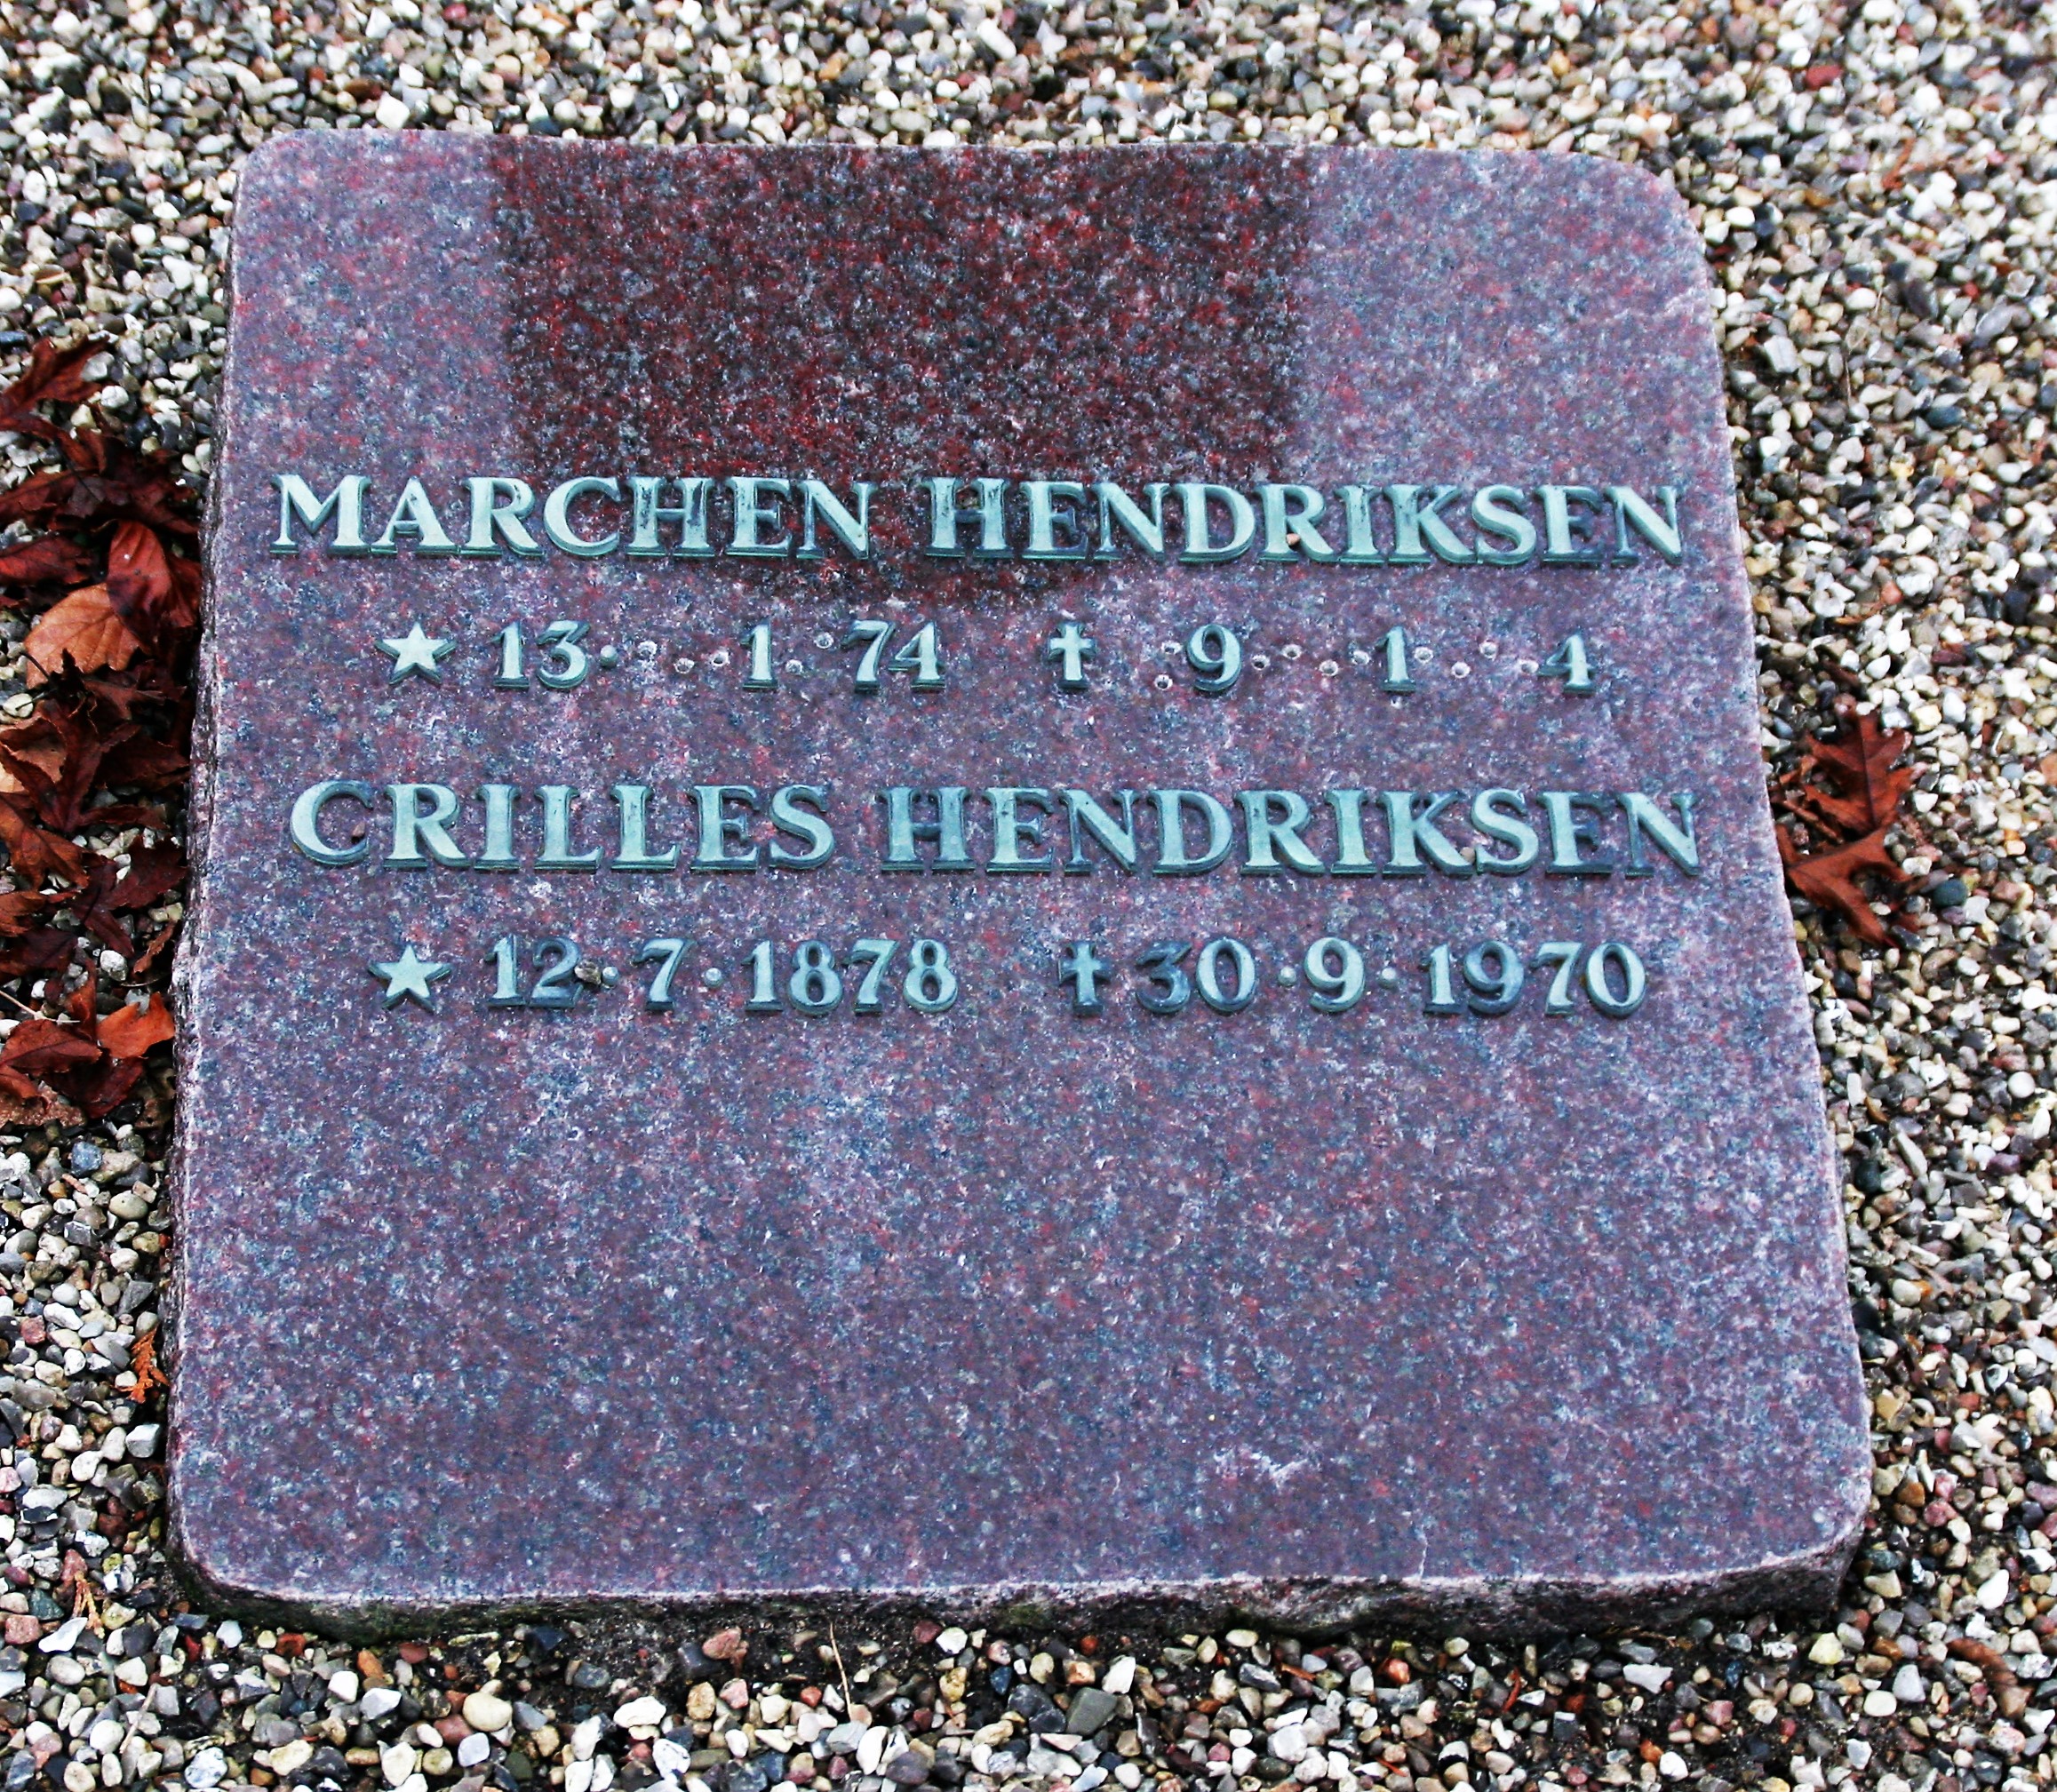 Grafsteen Crilles Hendriksen